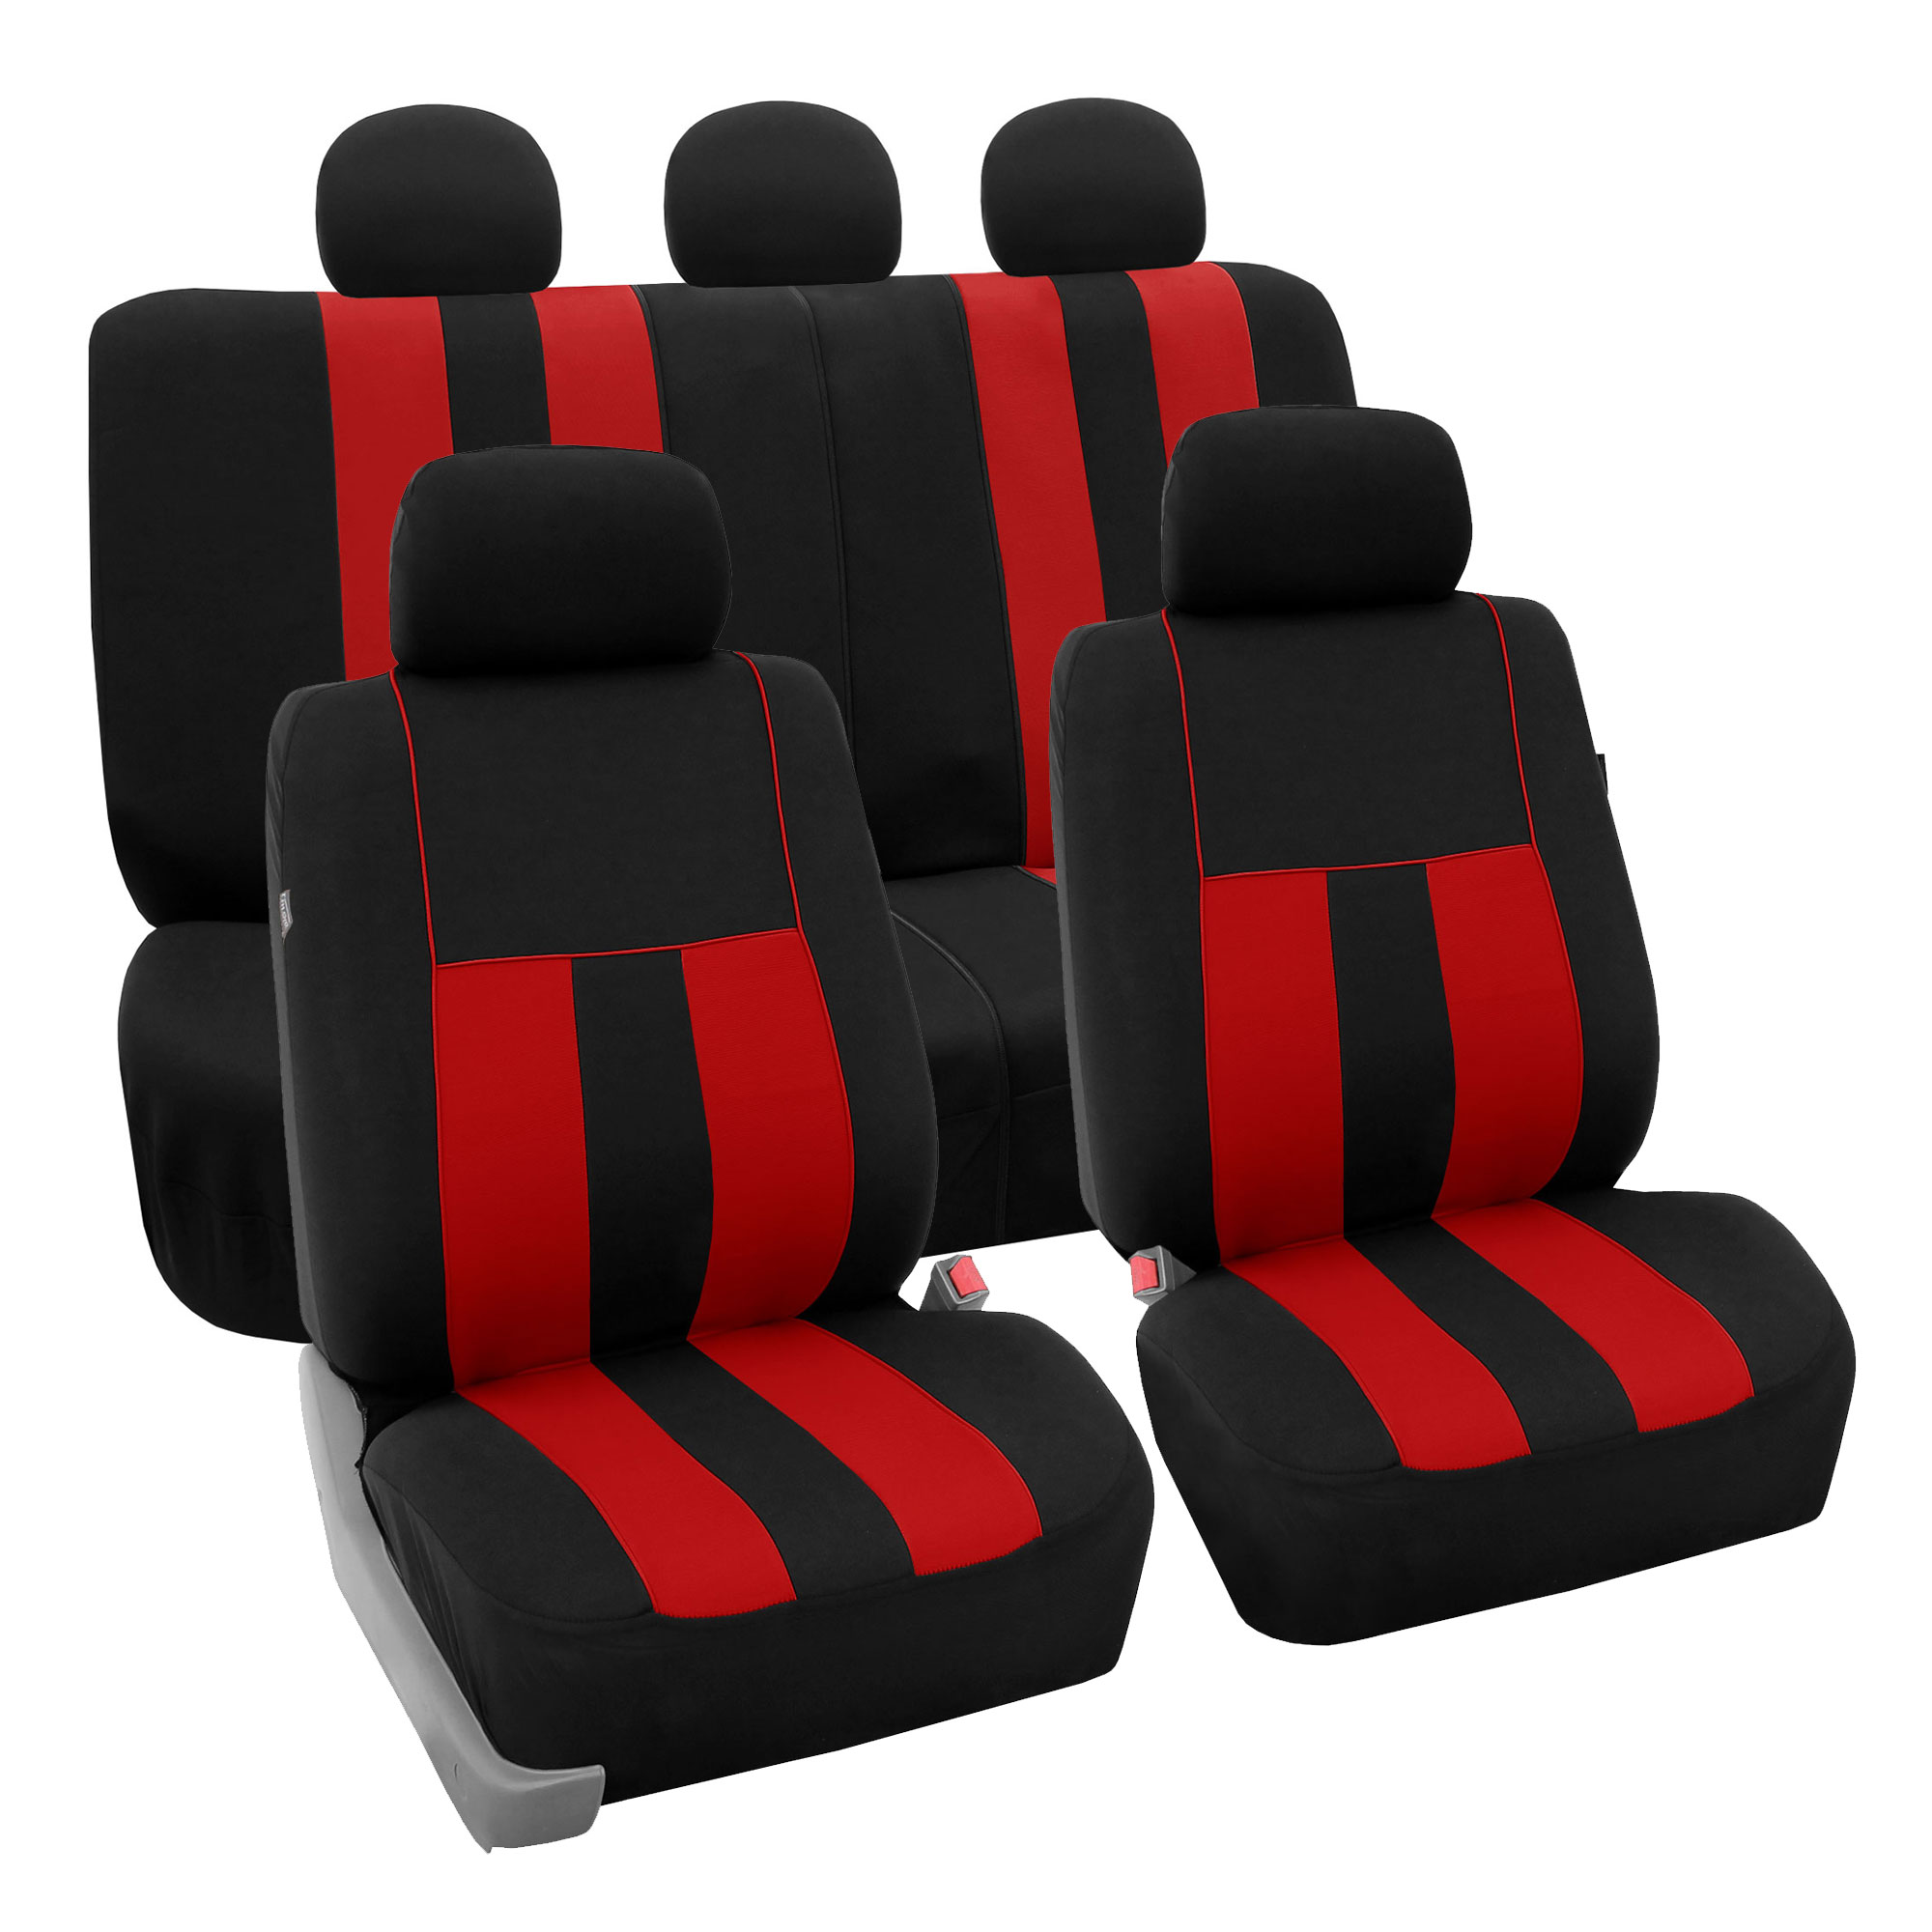 FH Group Car Seat Covers Striking Striped for Sedan, SUV, Van, Full Set w/ Steering Cover & Belt Pads, Red Black